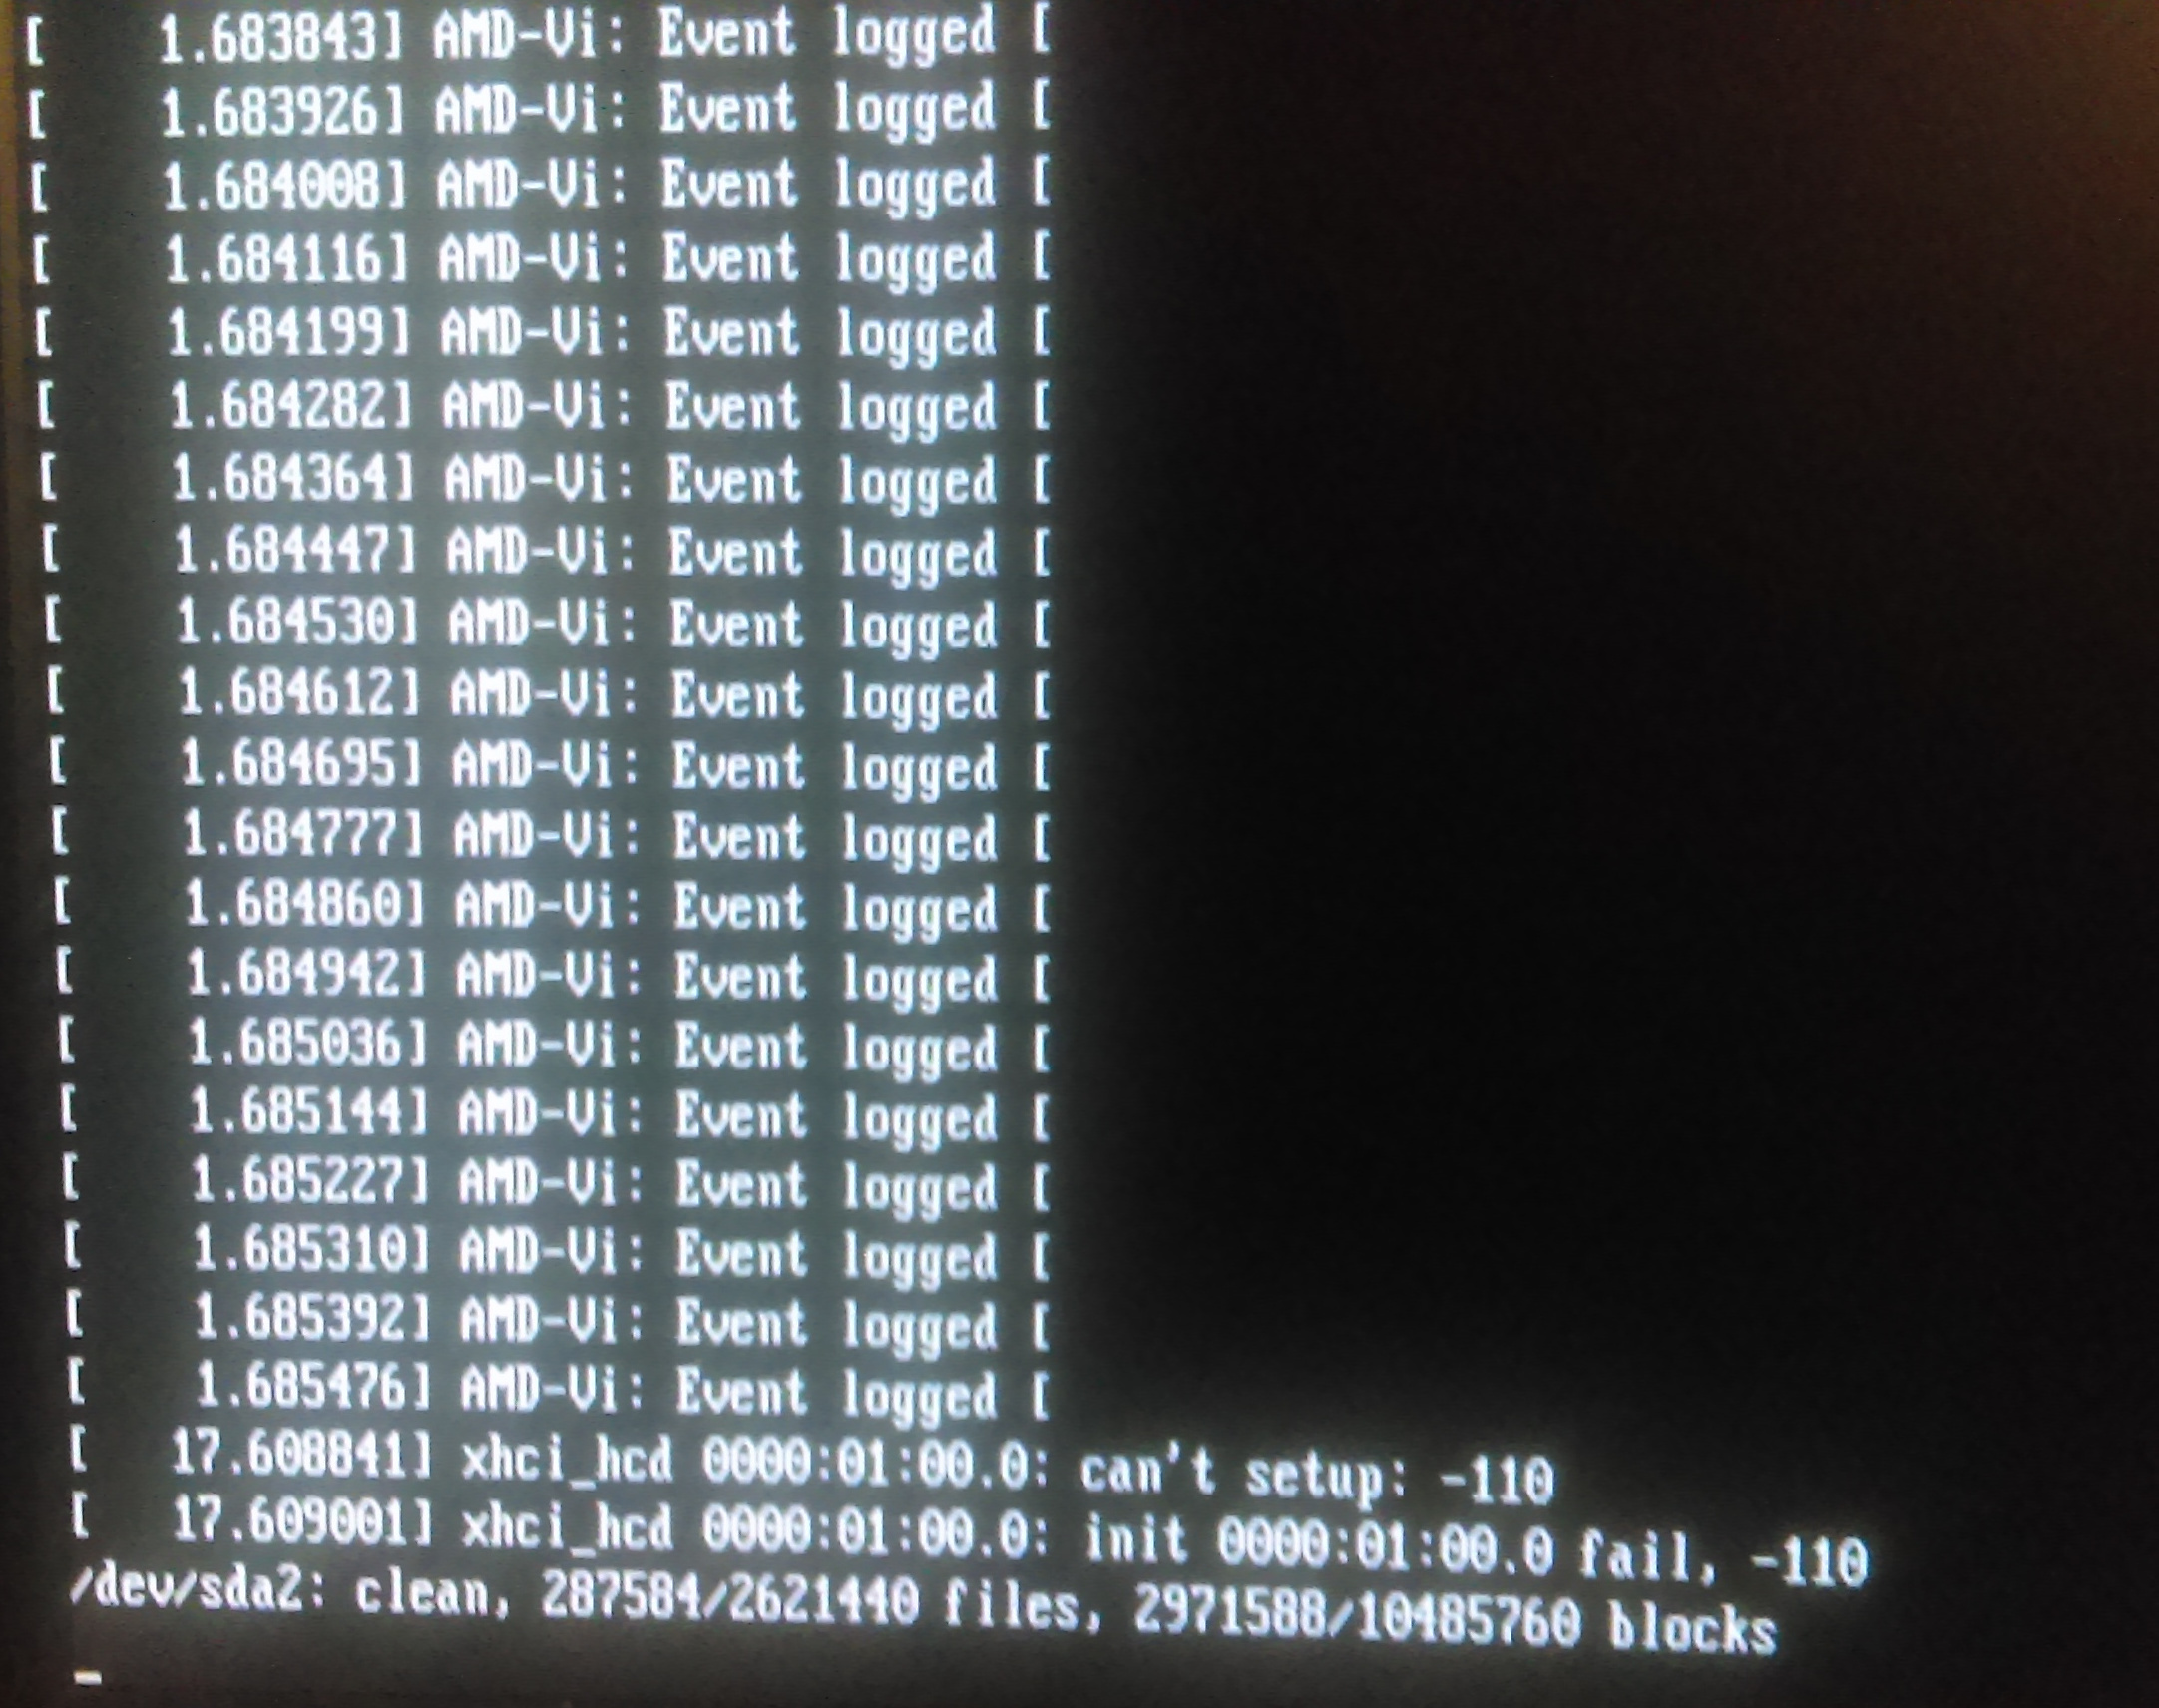 USB 3.0 not working - Support & Help Requests Ubuntu MATE Community